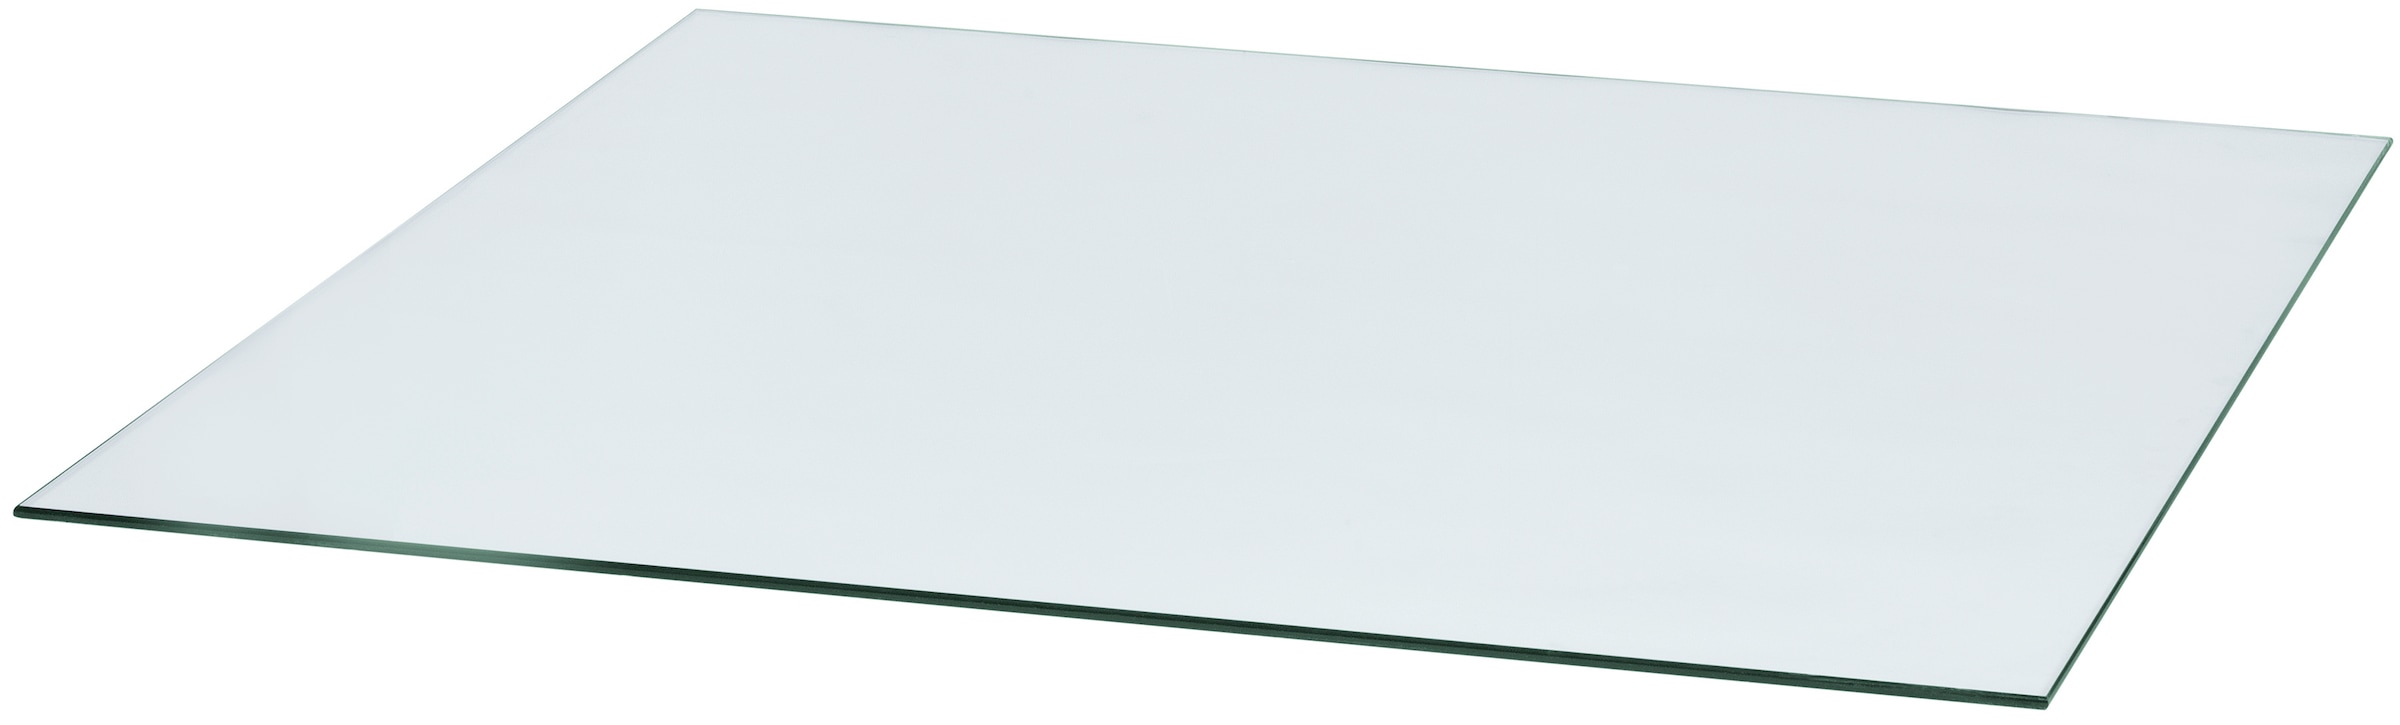 Heathus Bodenschutzplatte, Quadratisch, 110 x 110 cm, zum Funkenschutz